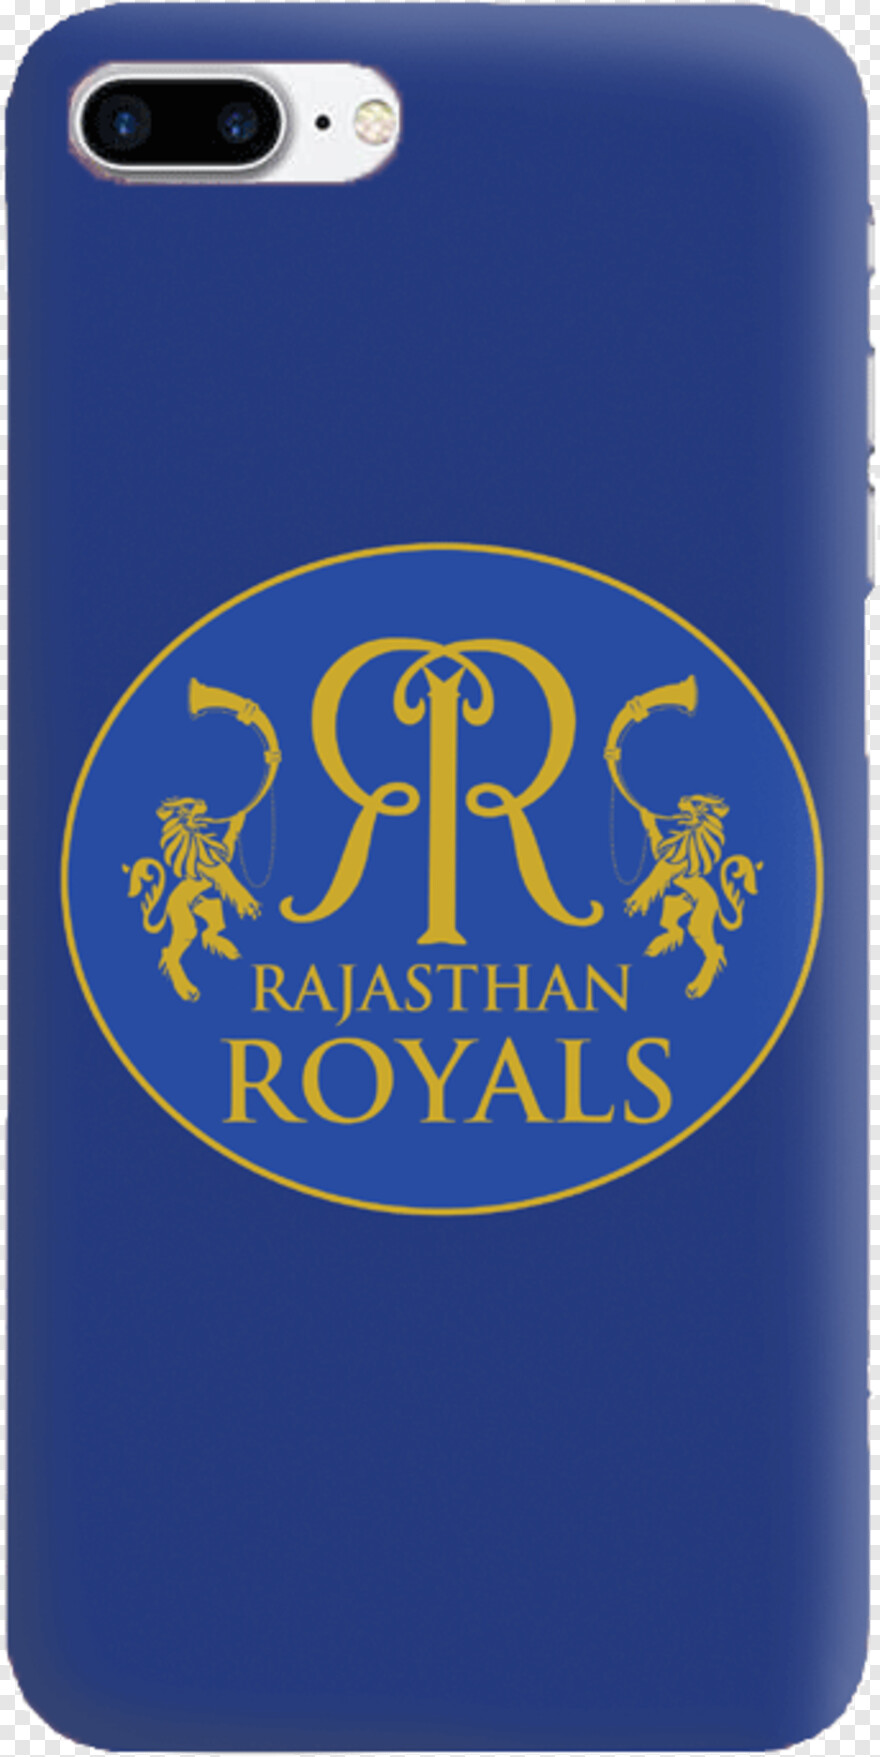 royals-logo # 950217